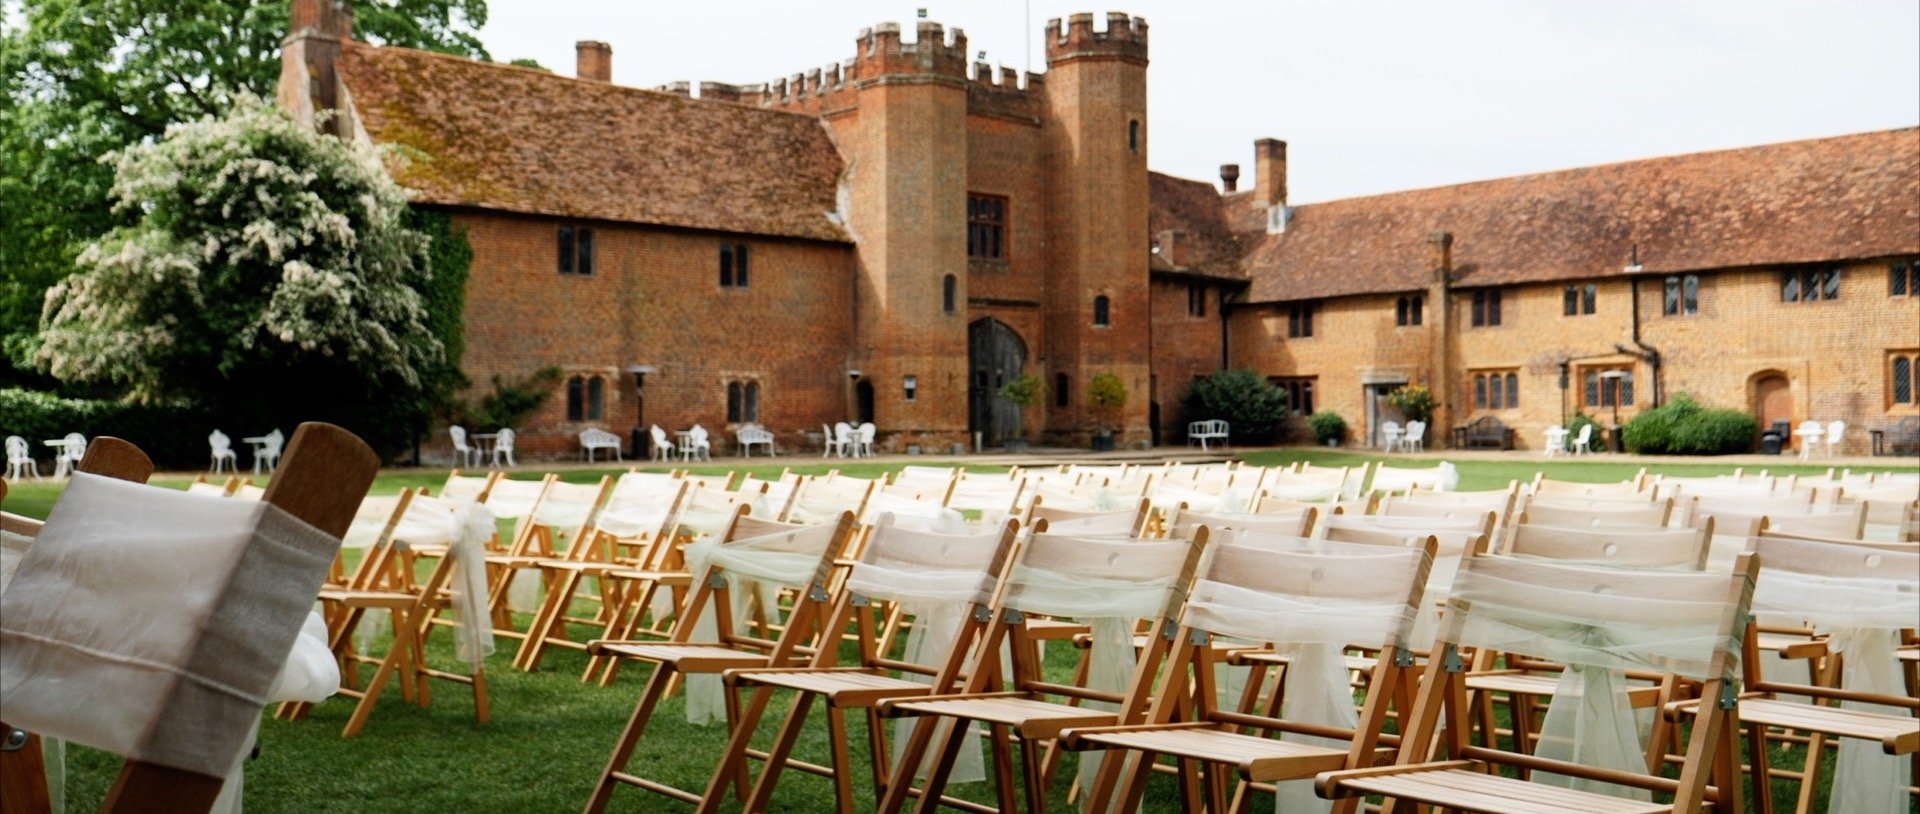 Leez Priory outdoor ceremony wedding videography Essex.jpg